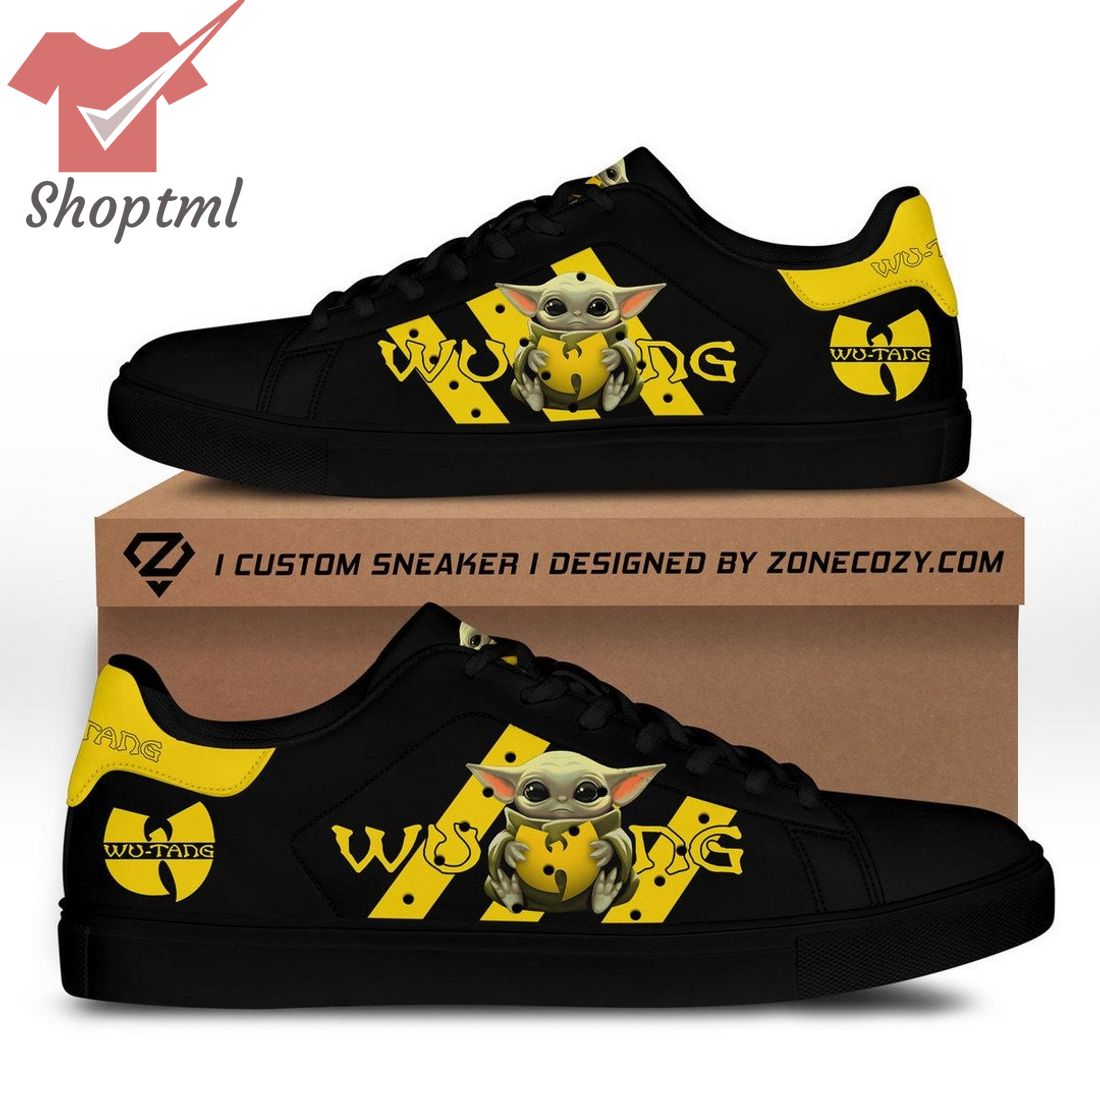 Wu-Tang baby yoda stan smith adidas shoes